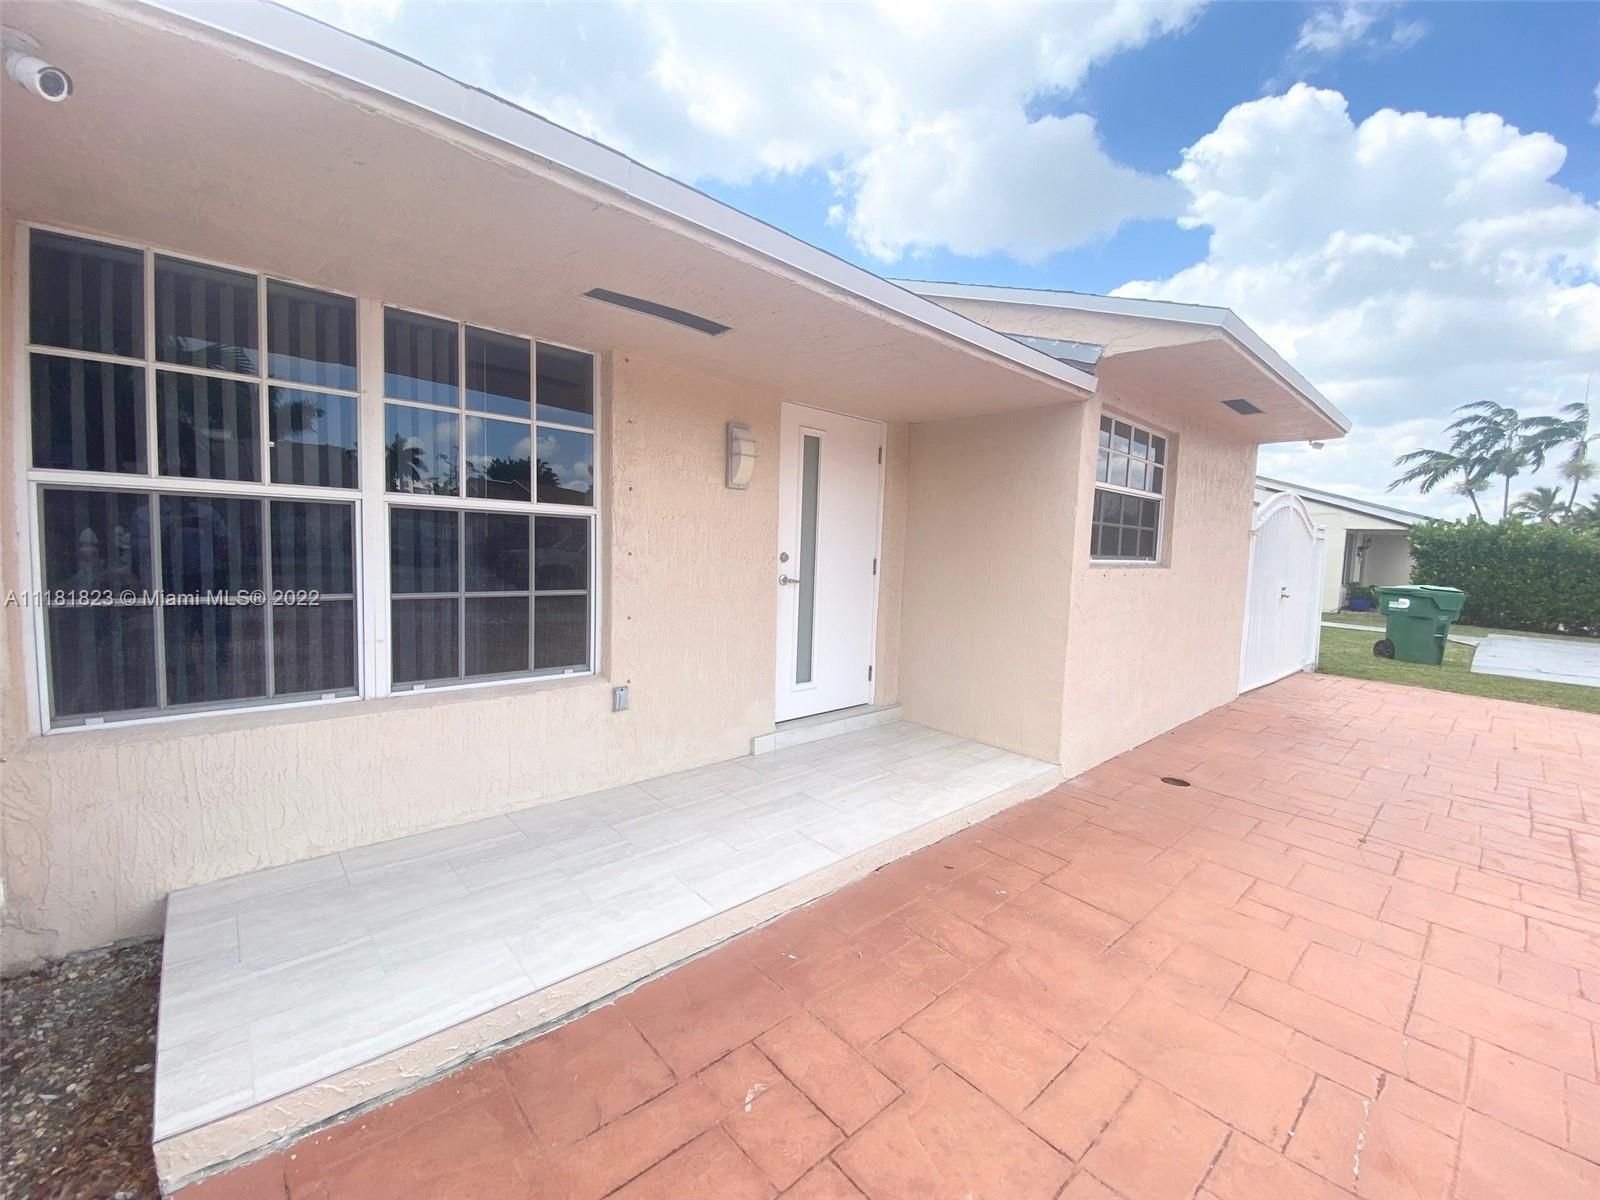 Real estate property located at 314 96th Ct #1, Miami-Dade County, Miami, FL